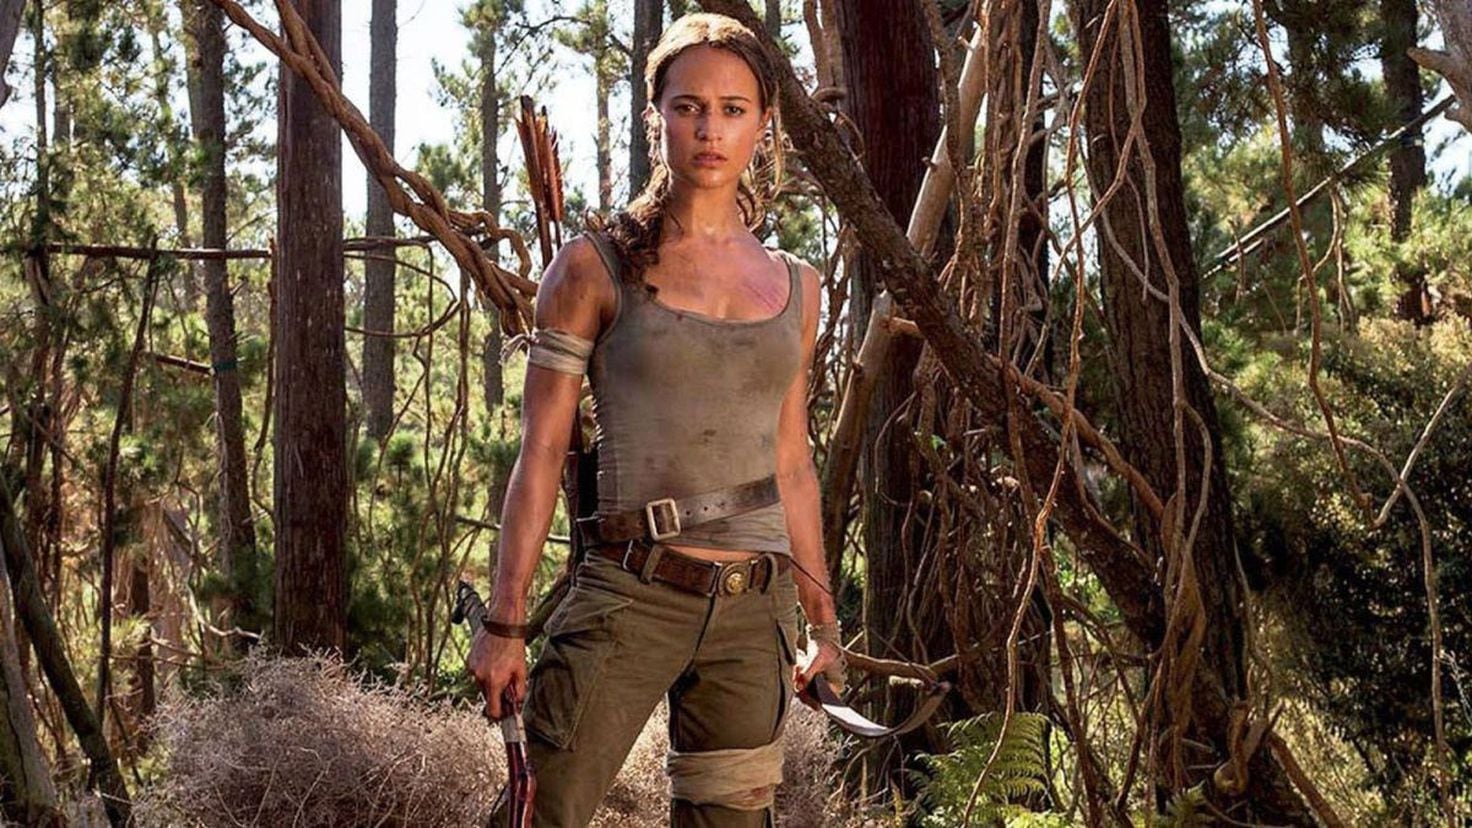 Tomb Raider Rise of the Tomb Raider Lara Croft Alicia Vikander